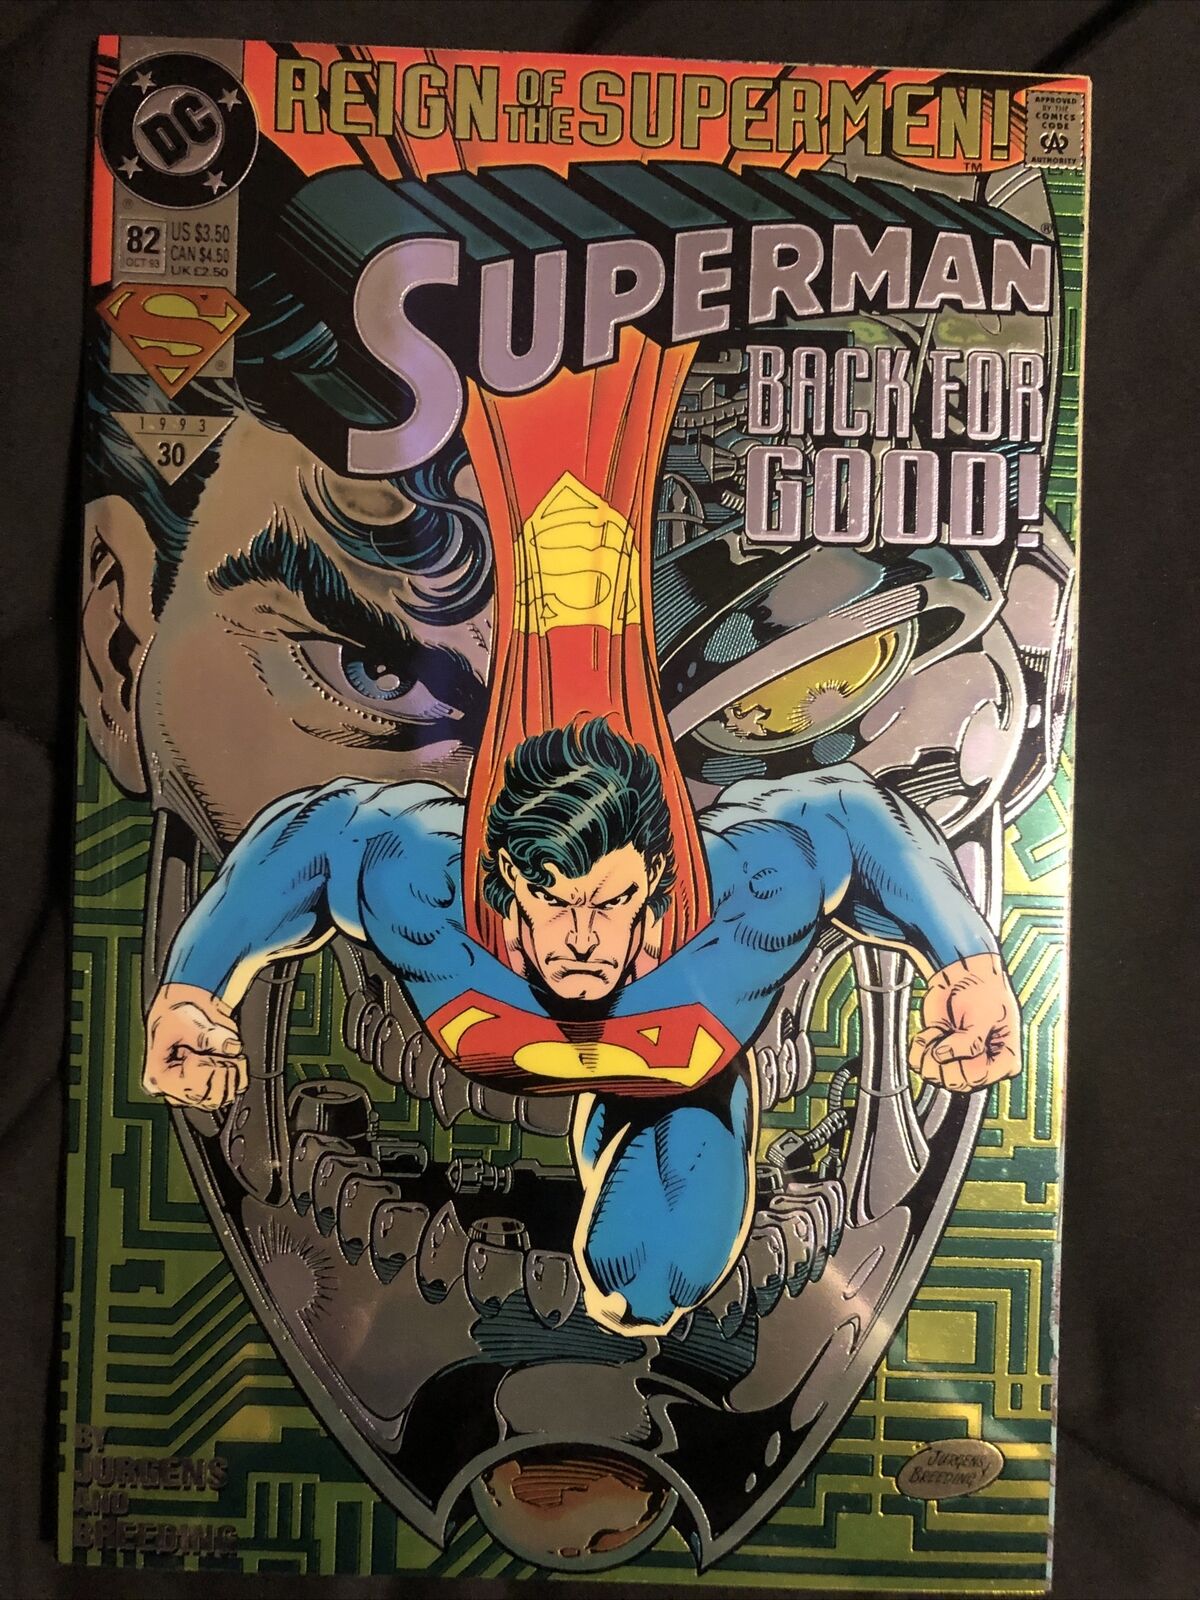 DC Comics Reign of The Supermen Superman Back for Good #82 October 1993